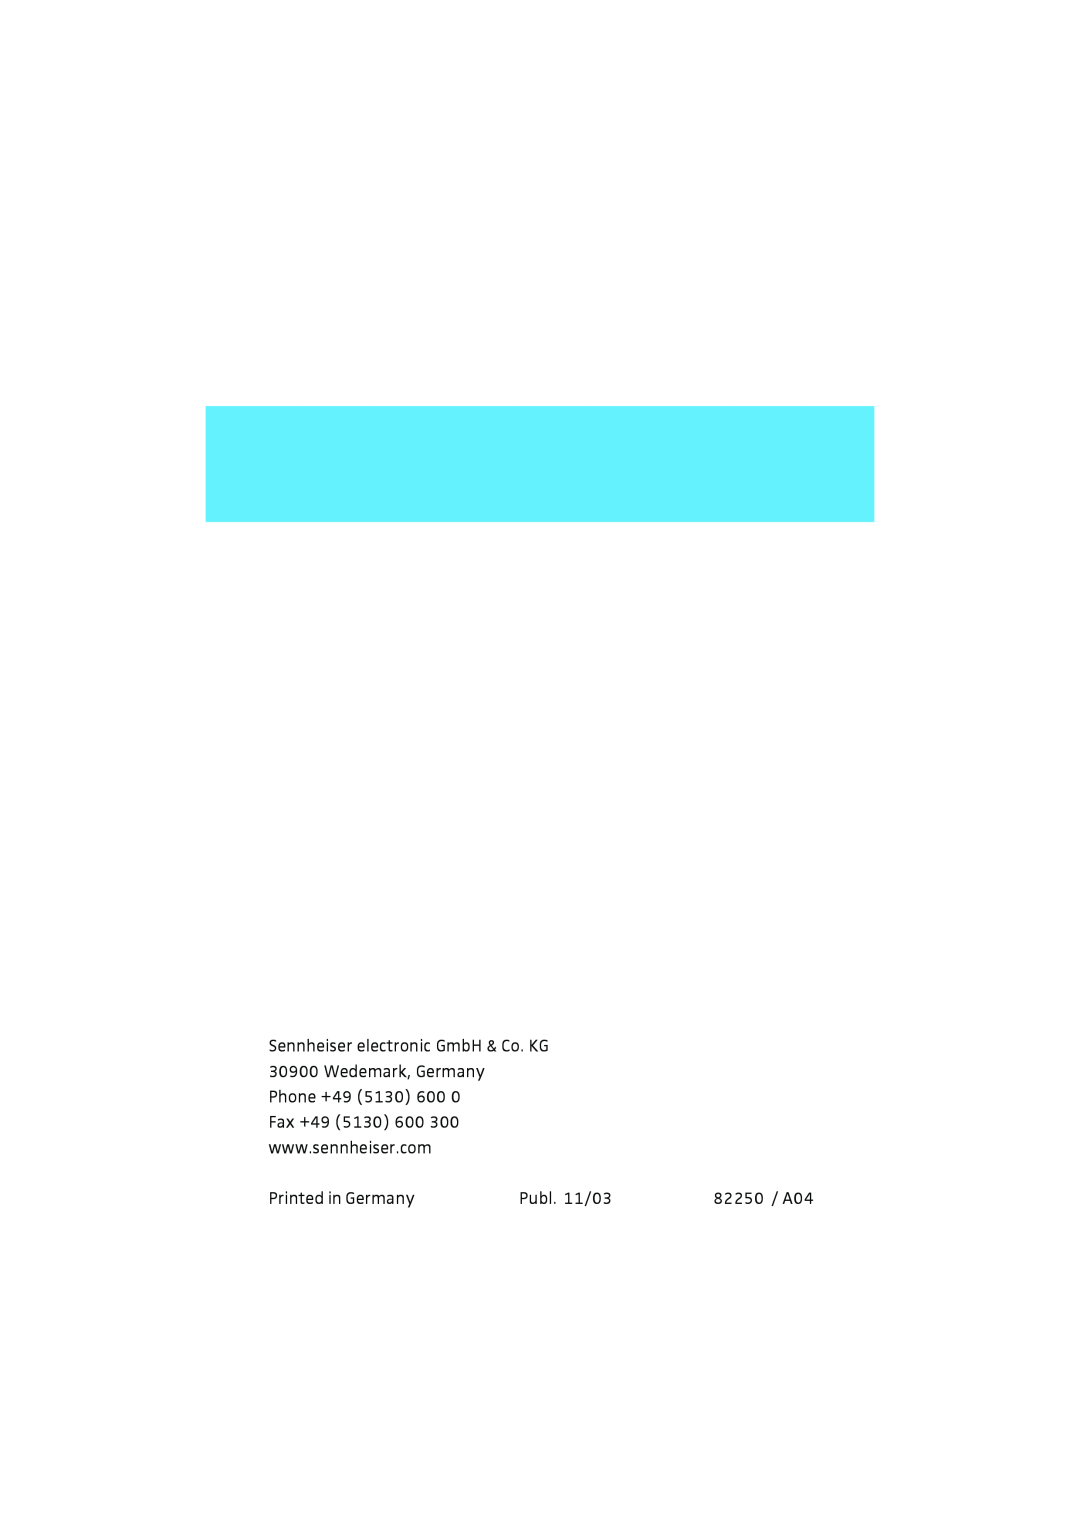 Sennheiser RS 40 instruction manual Publ. 11/03, 82250 / A04 